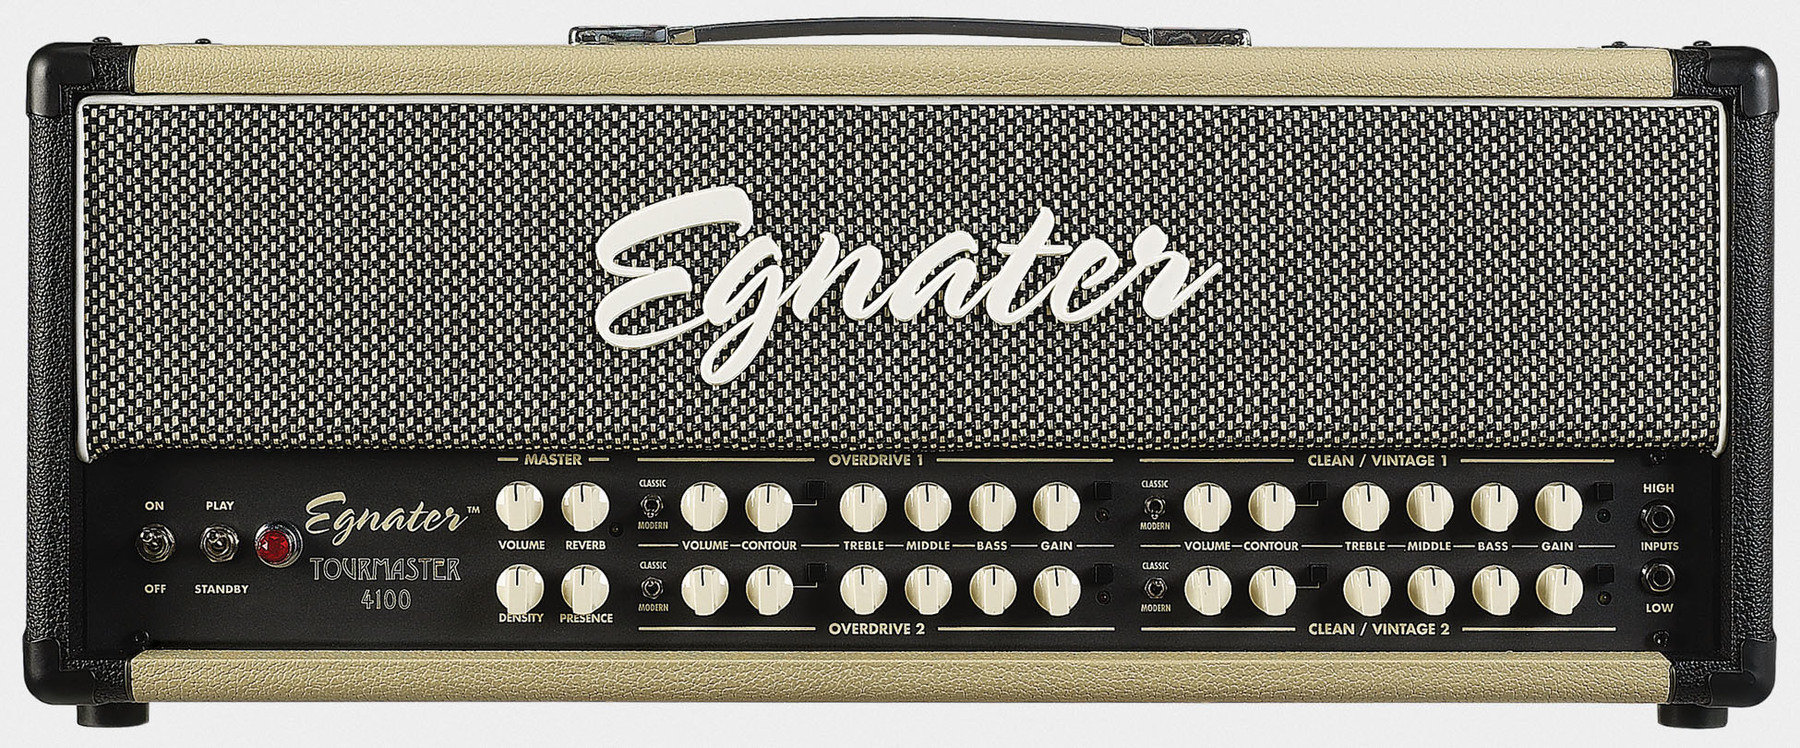 Amplificador de válvulas Egnater Tourmaster 4100